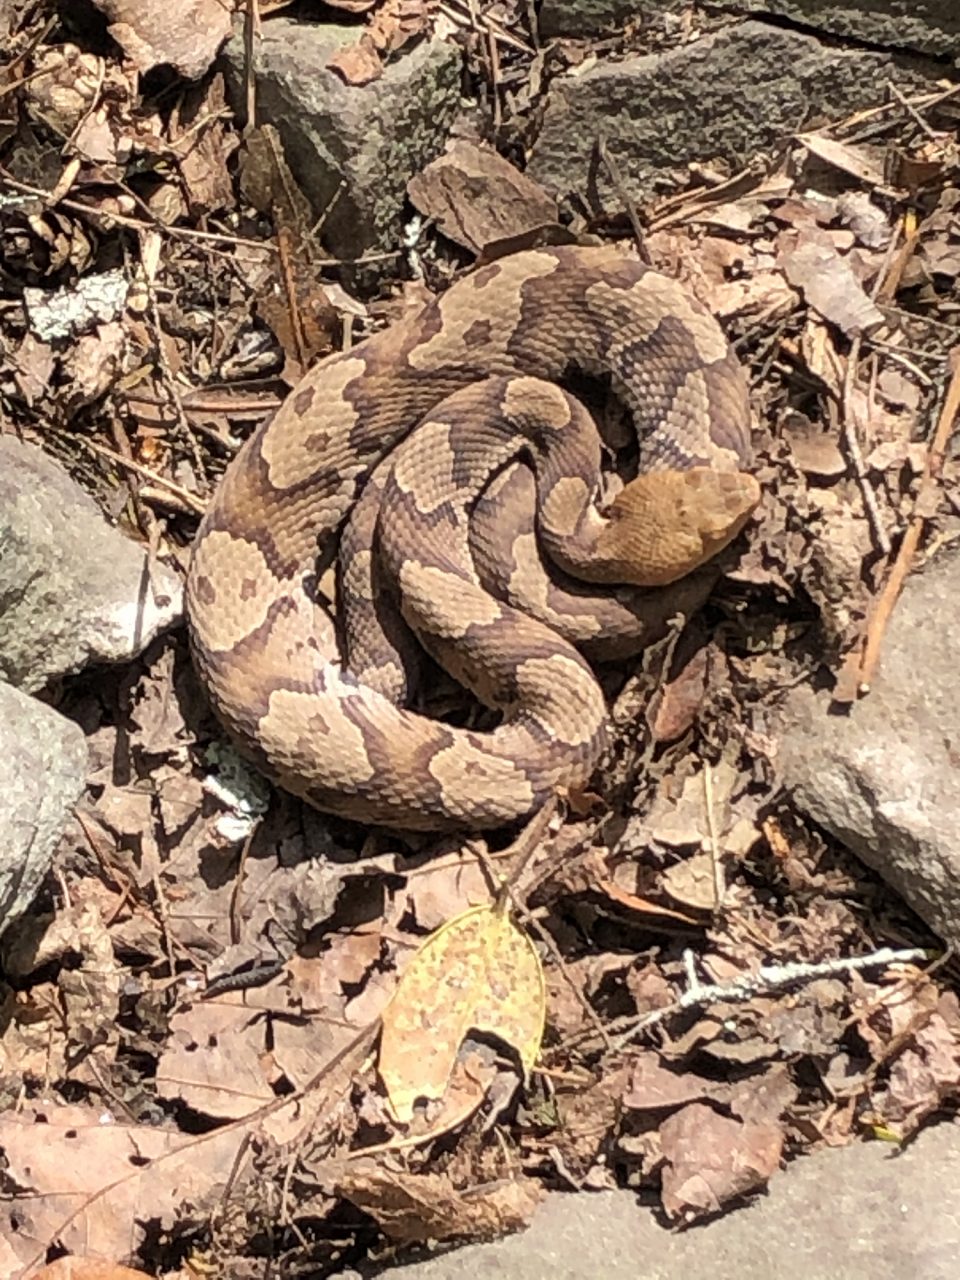 Copperhead snake lying in the sun near a hiking trail